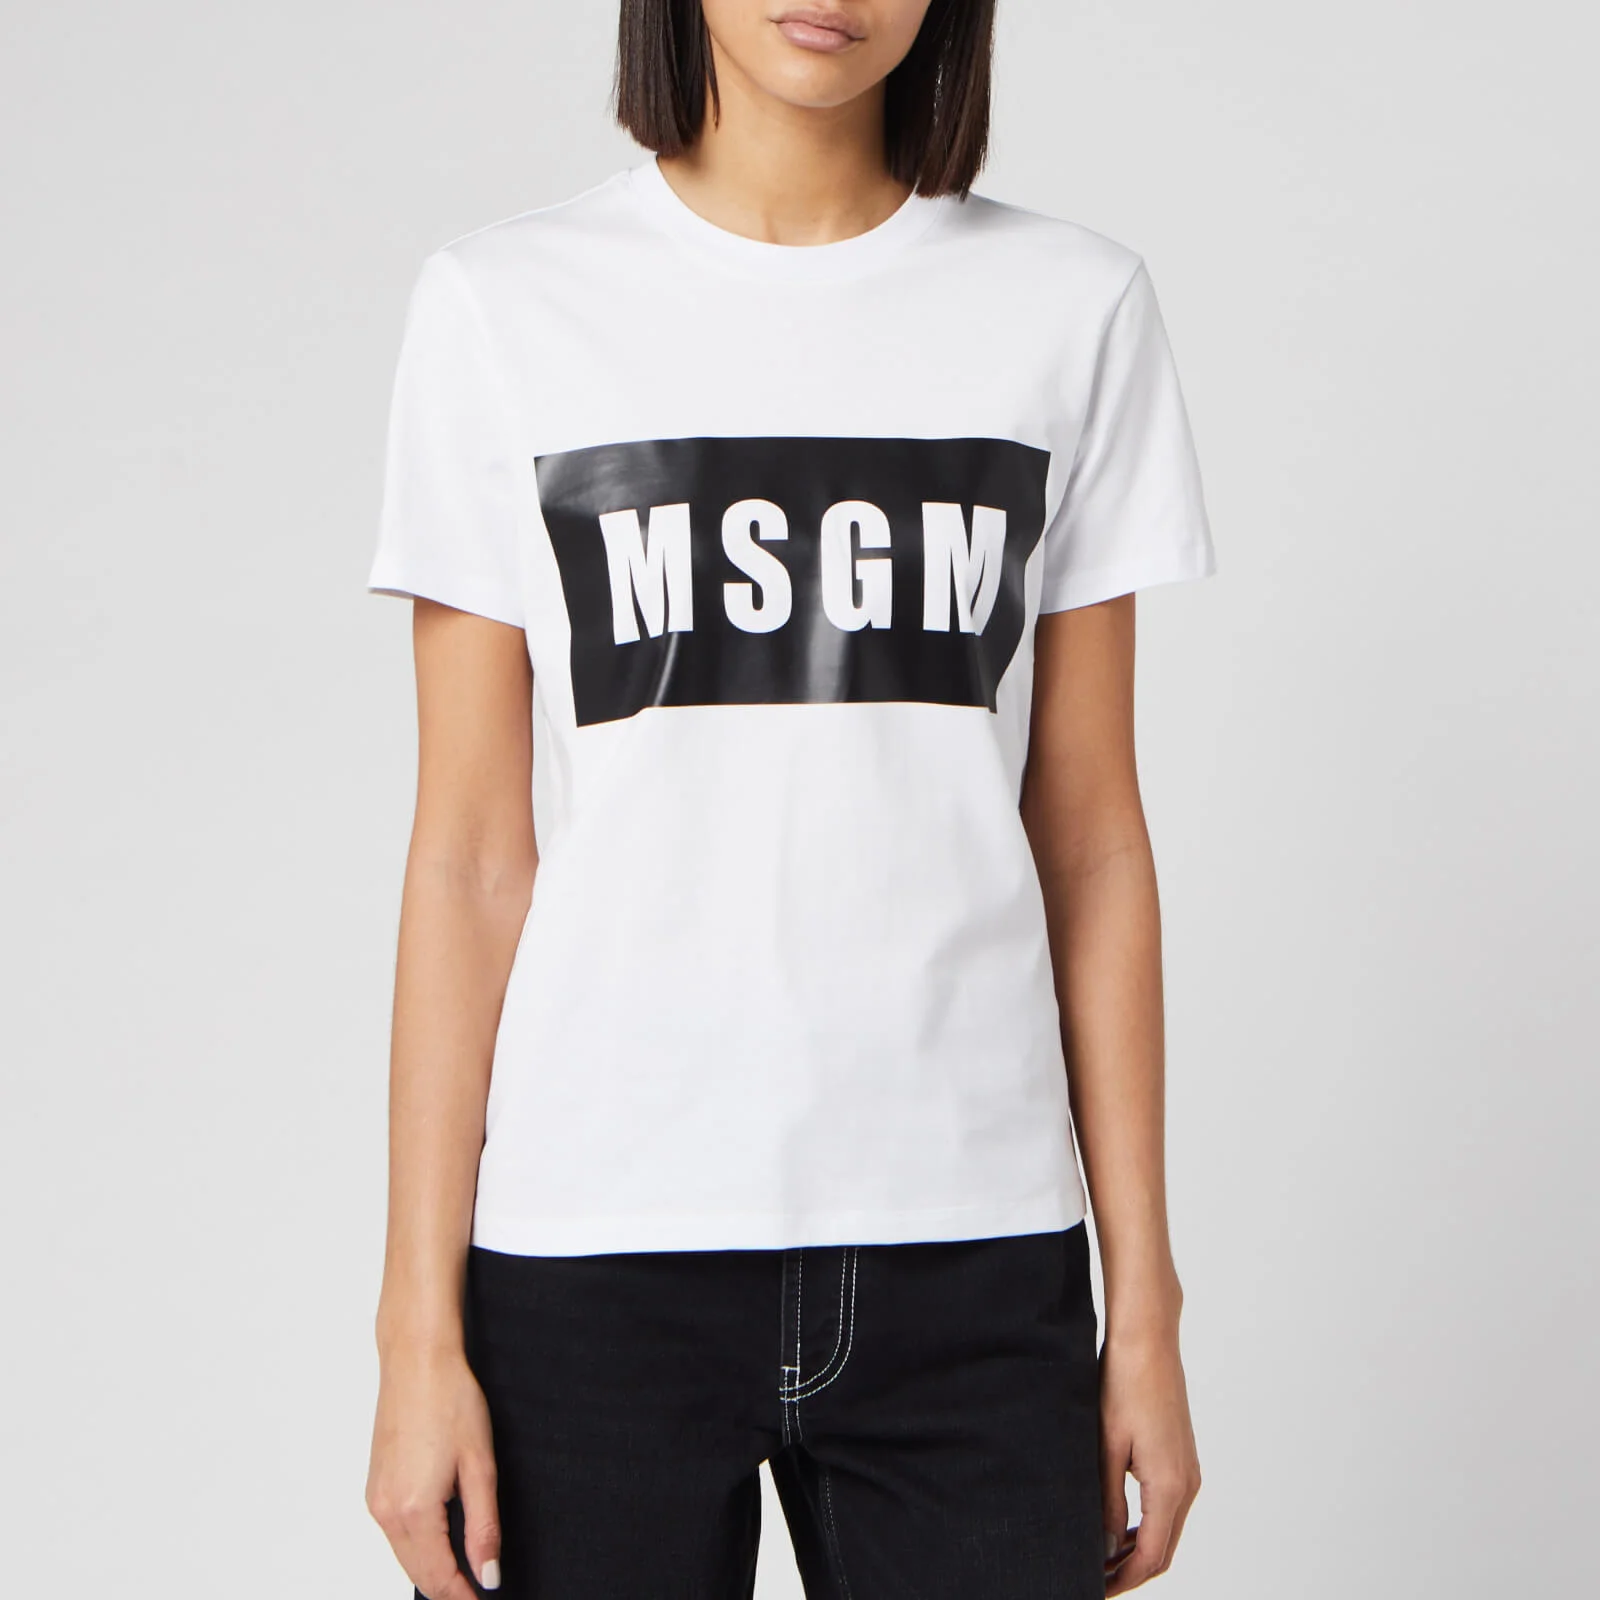 MSGM Women's Foil Logo T-Shirt - Optical White Image 1